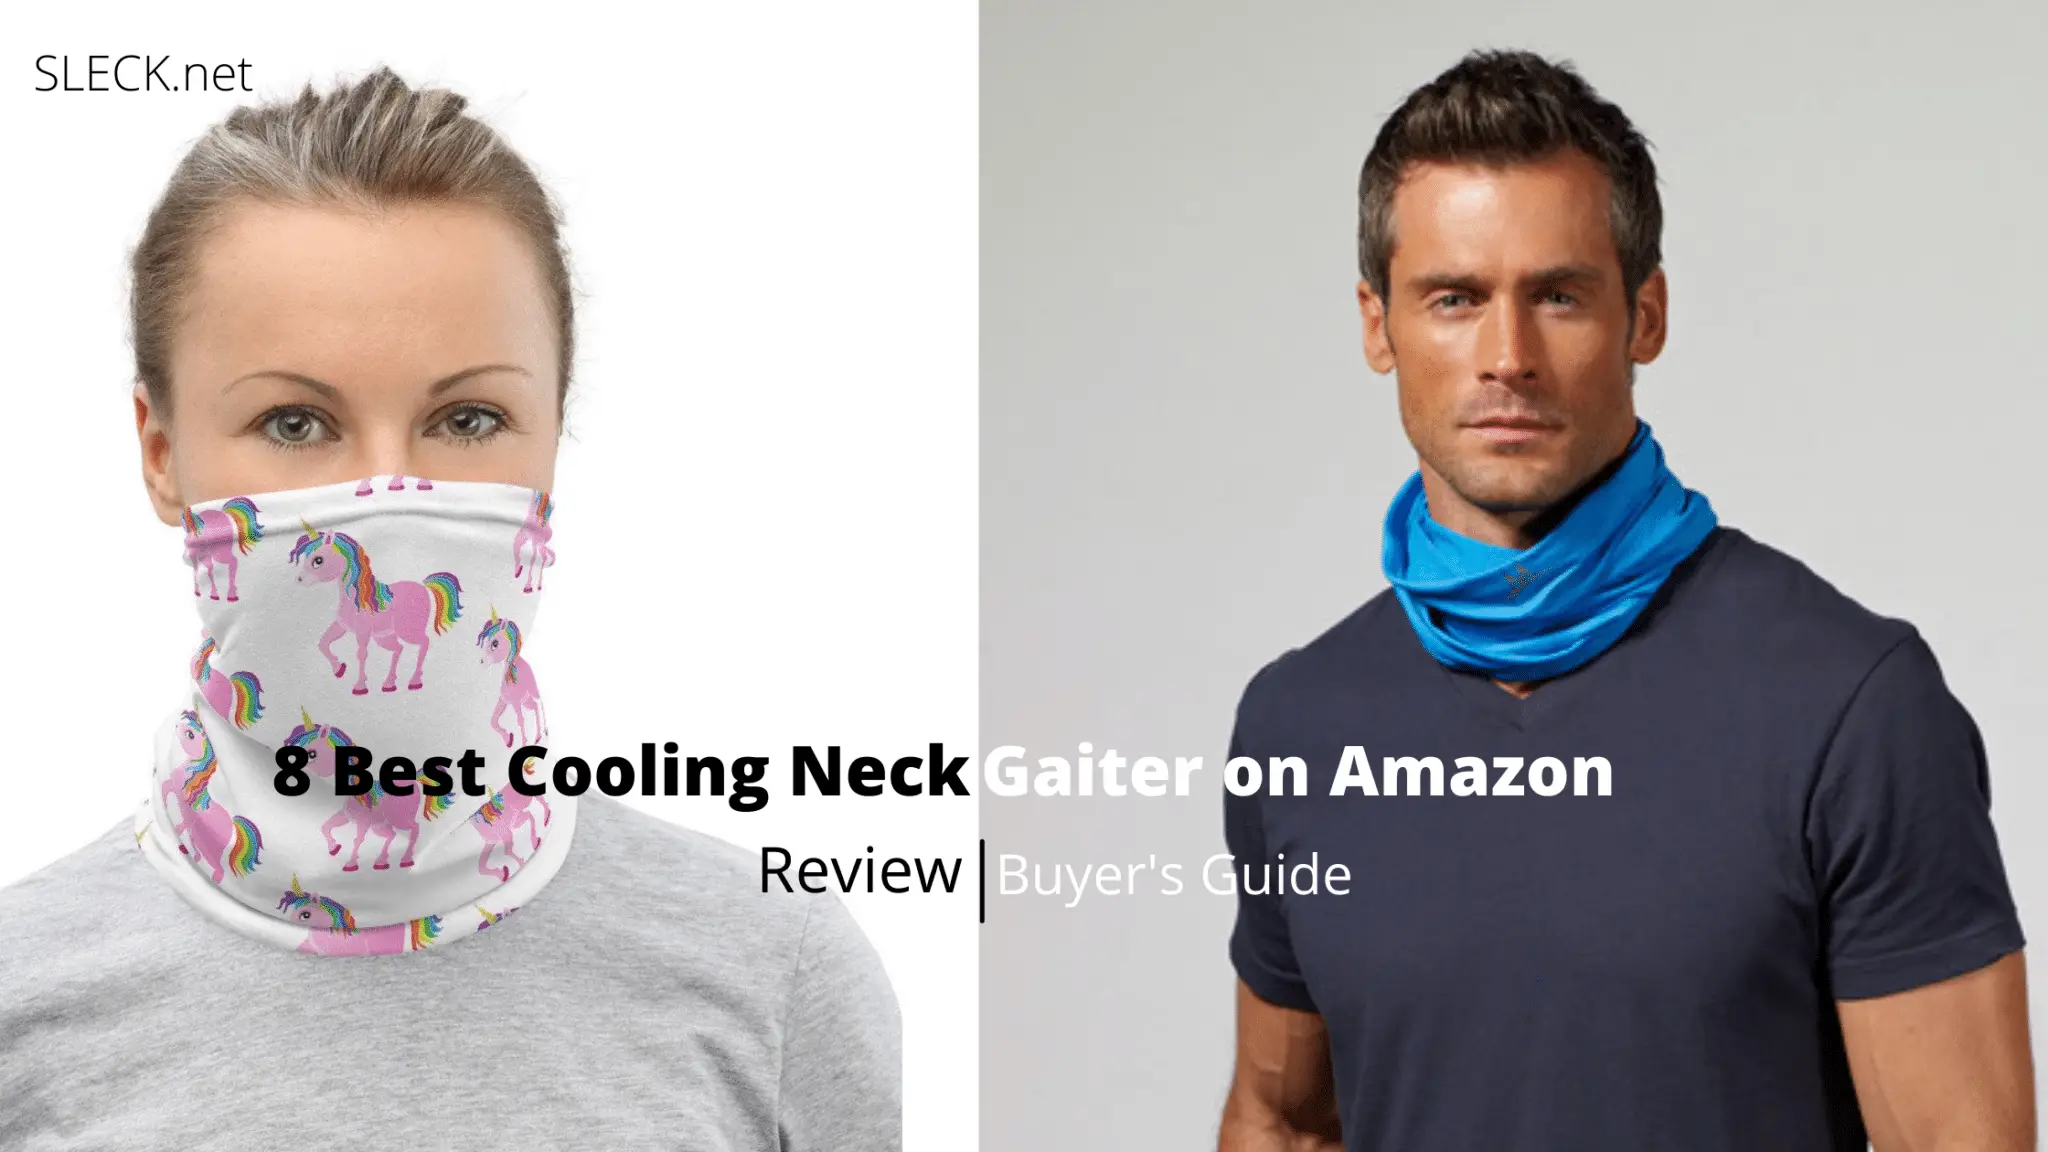 8 Best Cooling Neck Gaiter on Amazon